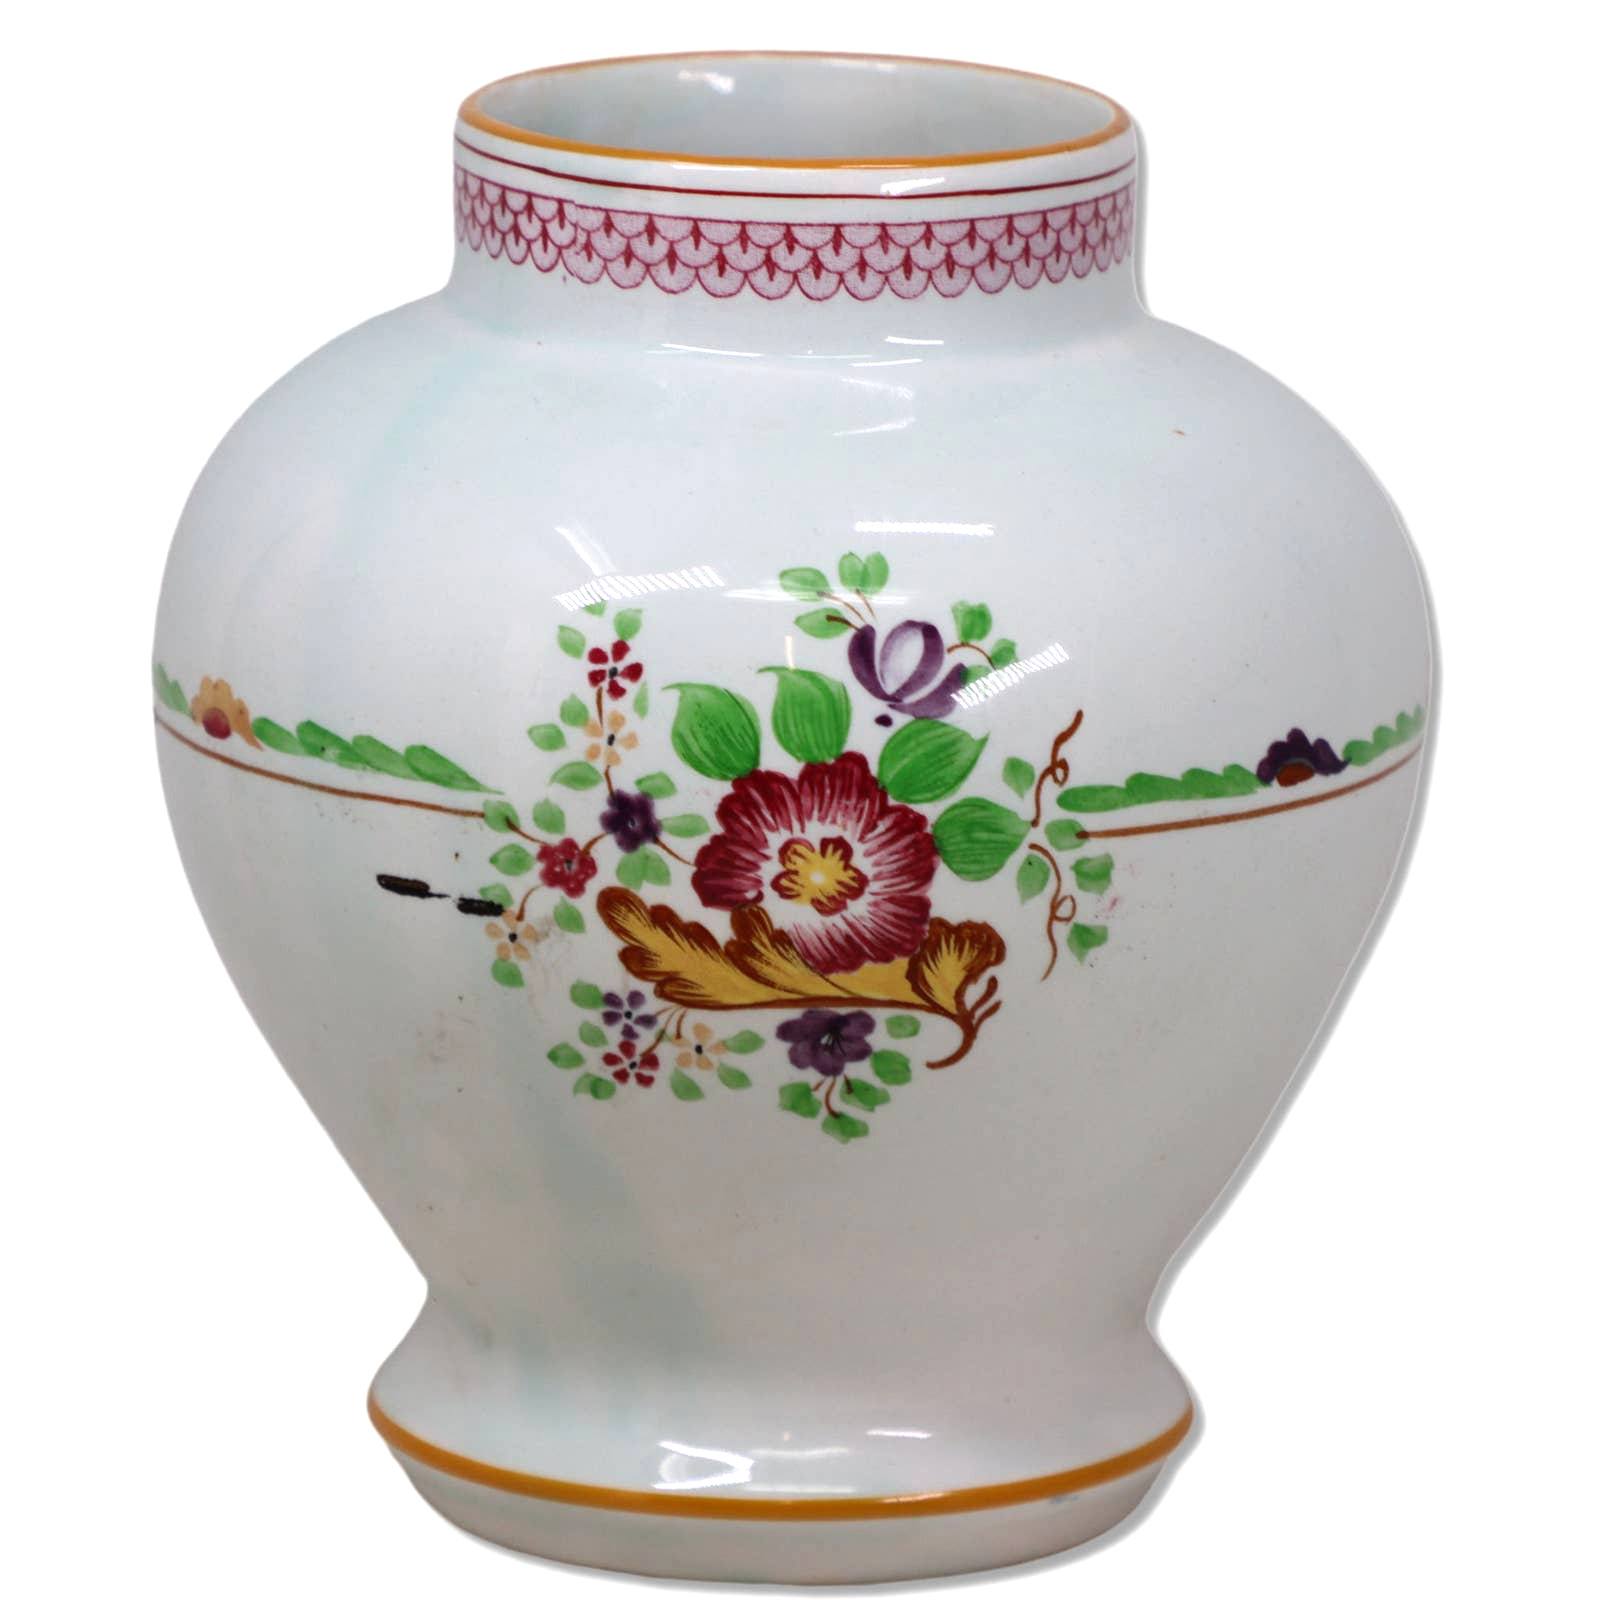 Adams Carolynn Calyx Ware Floral Vase Ironstone Cachepot 1900-40 Antique